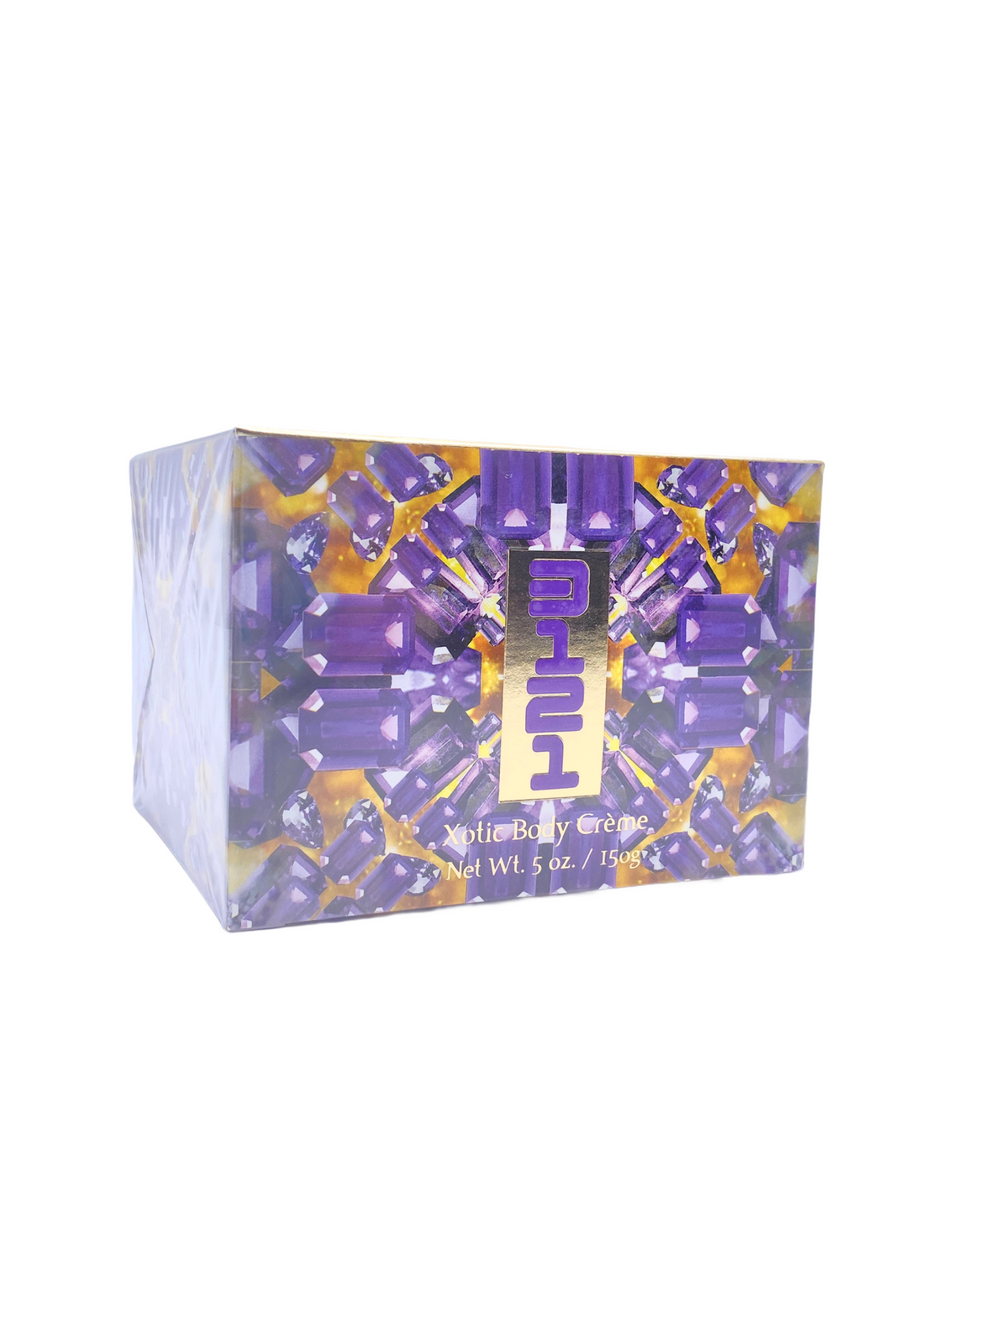 Prince – 3121 Xotic Body Creme Official Merchandise Net Weight 5oz / 15 oz  Prince Cream Perfume